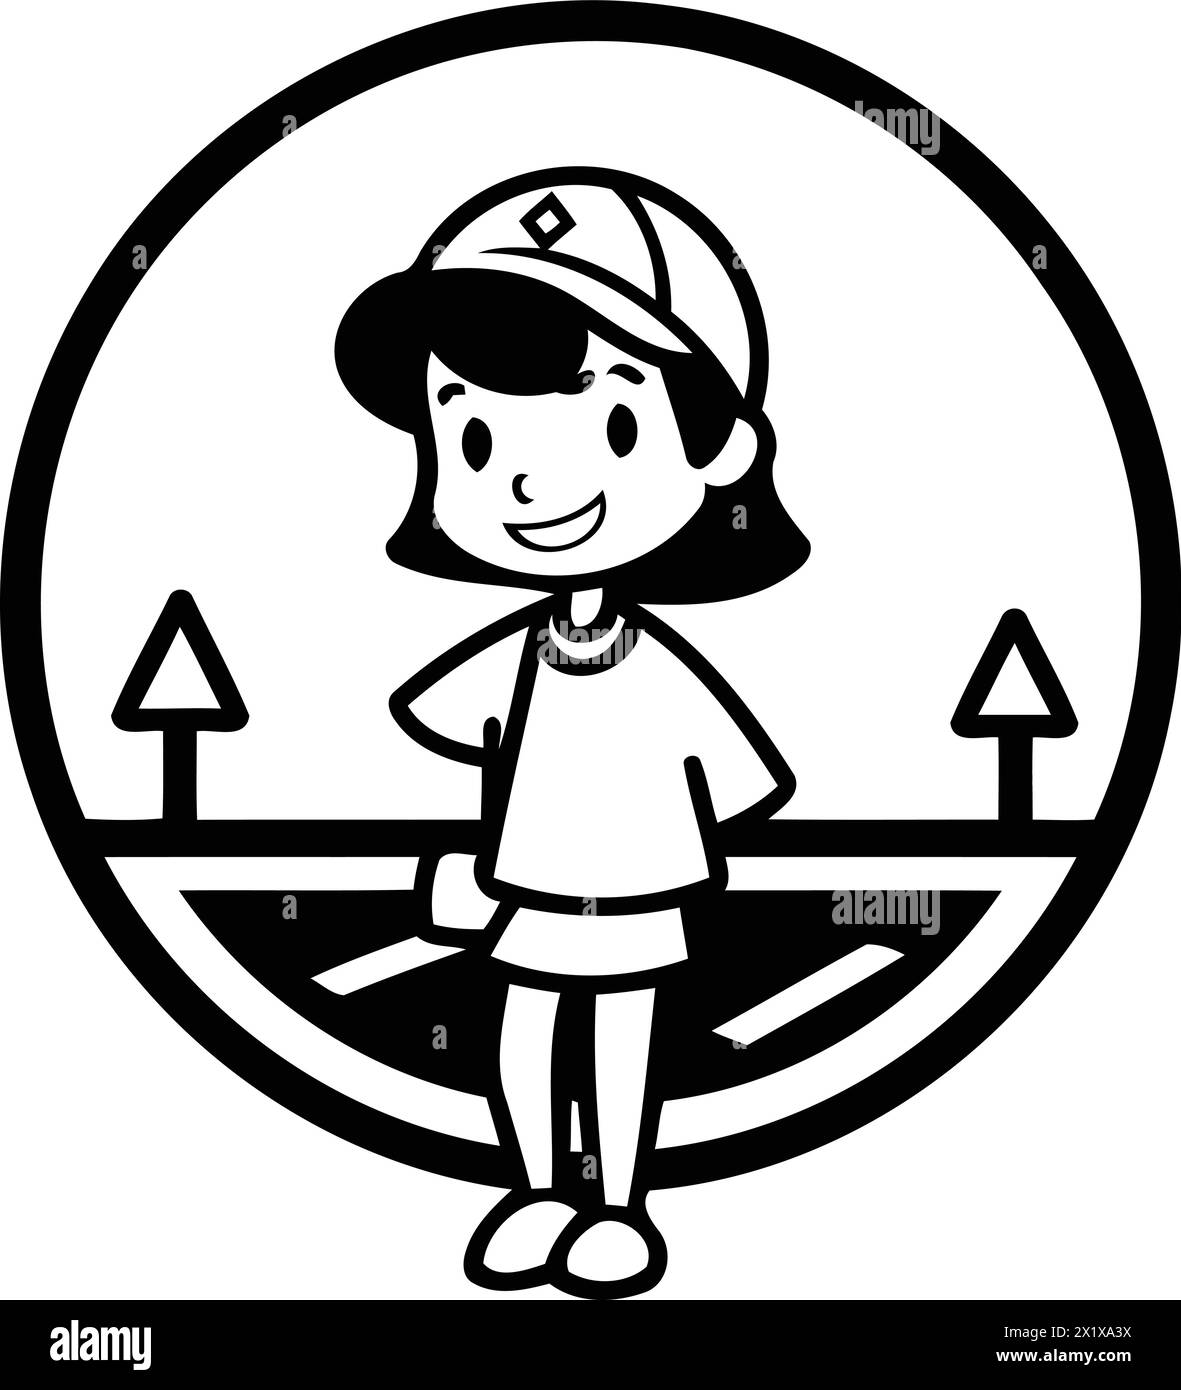 Cute little girl wearing safety helmet. Cartoon character design. Vector illustration. Stock Vector